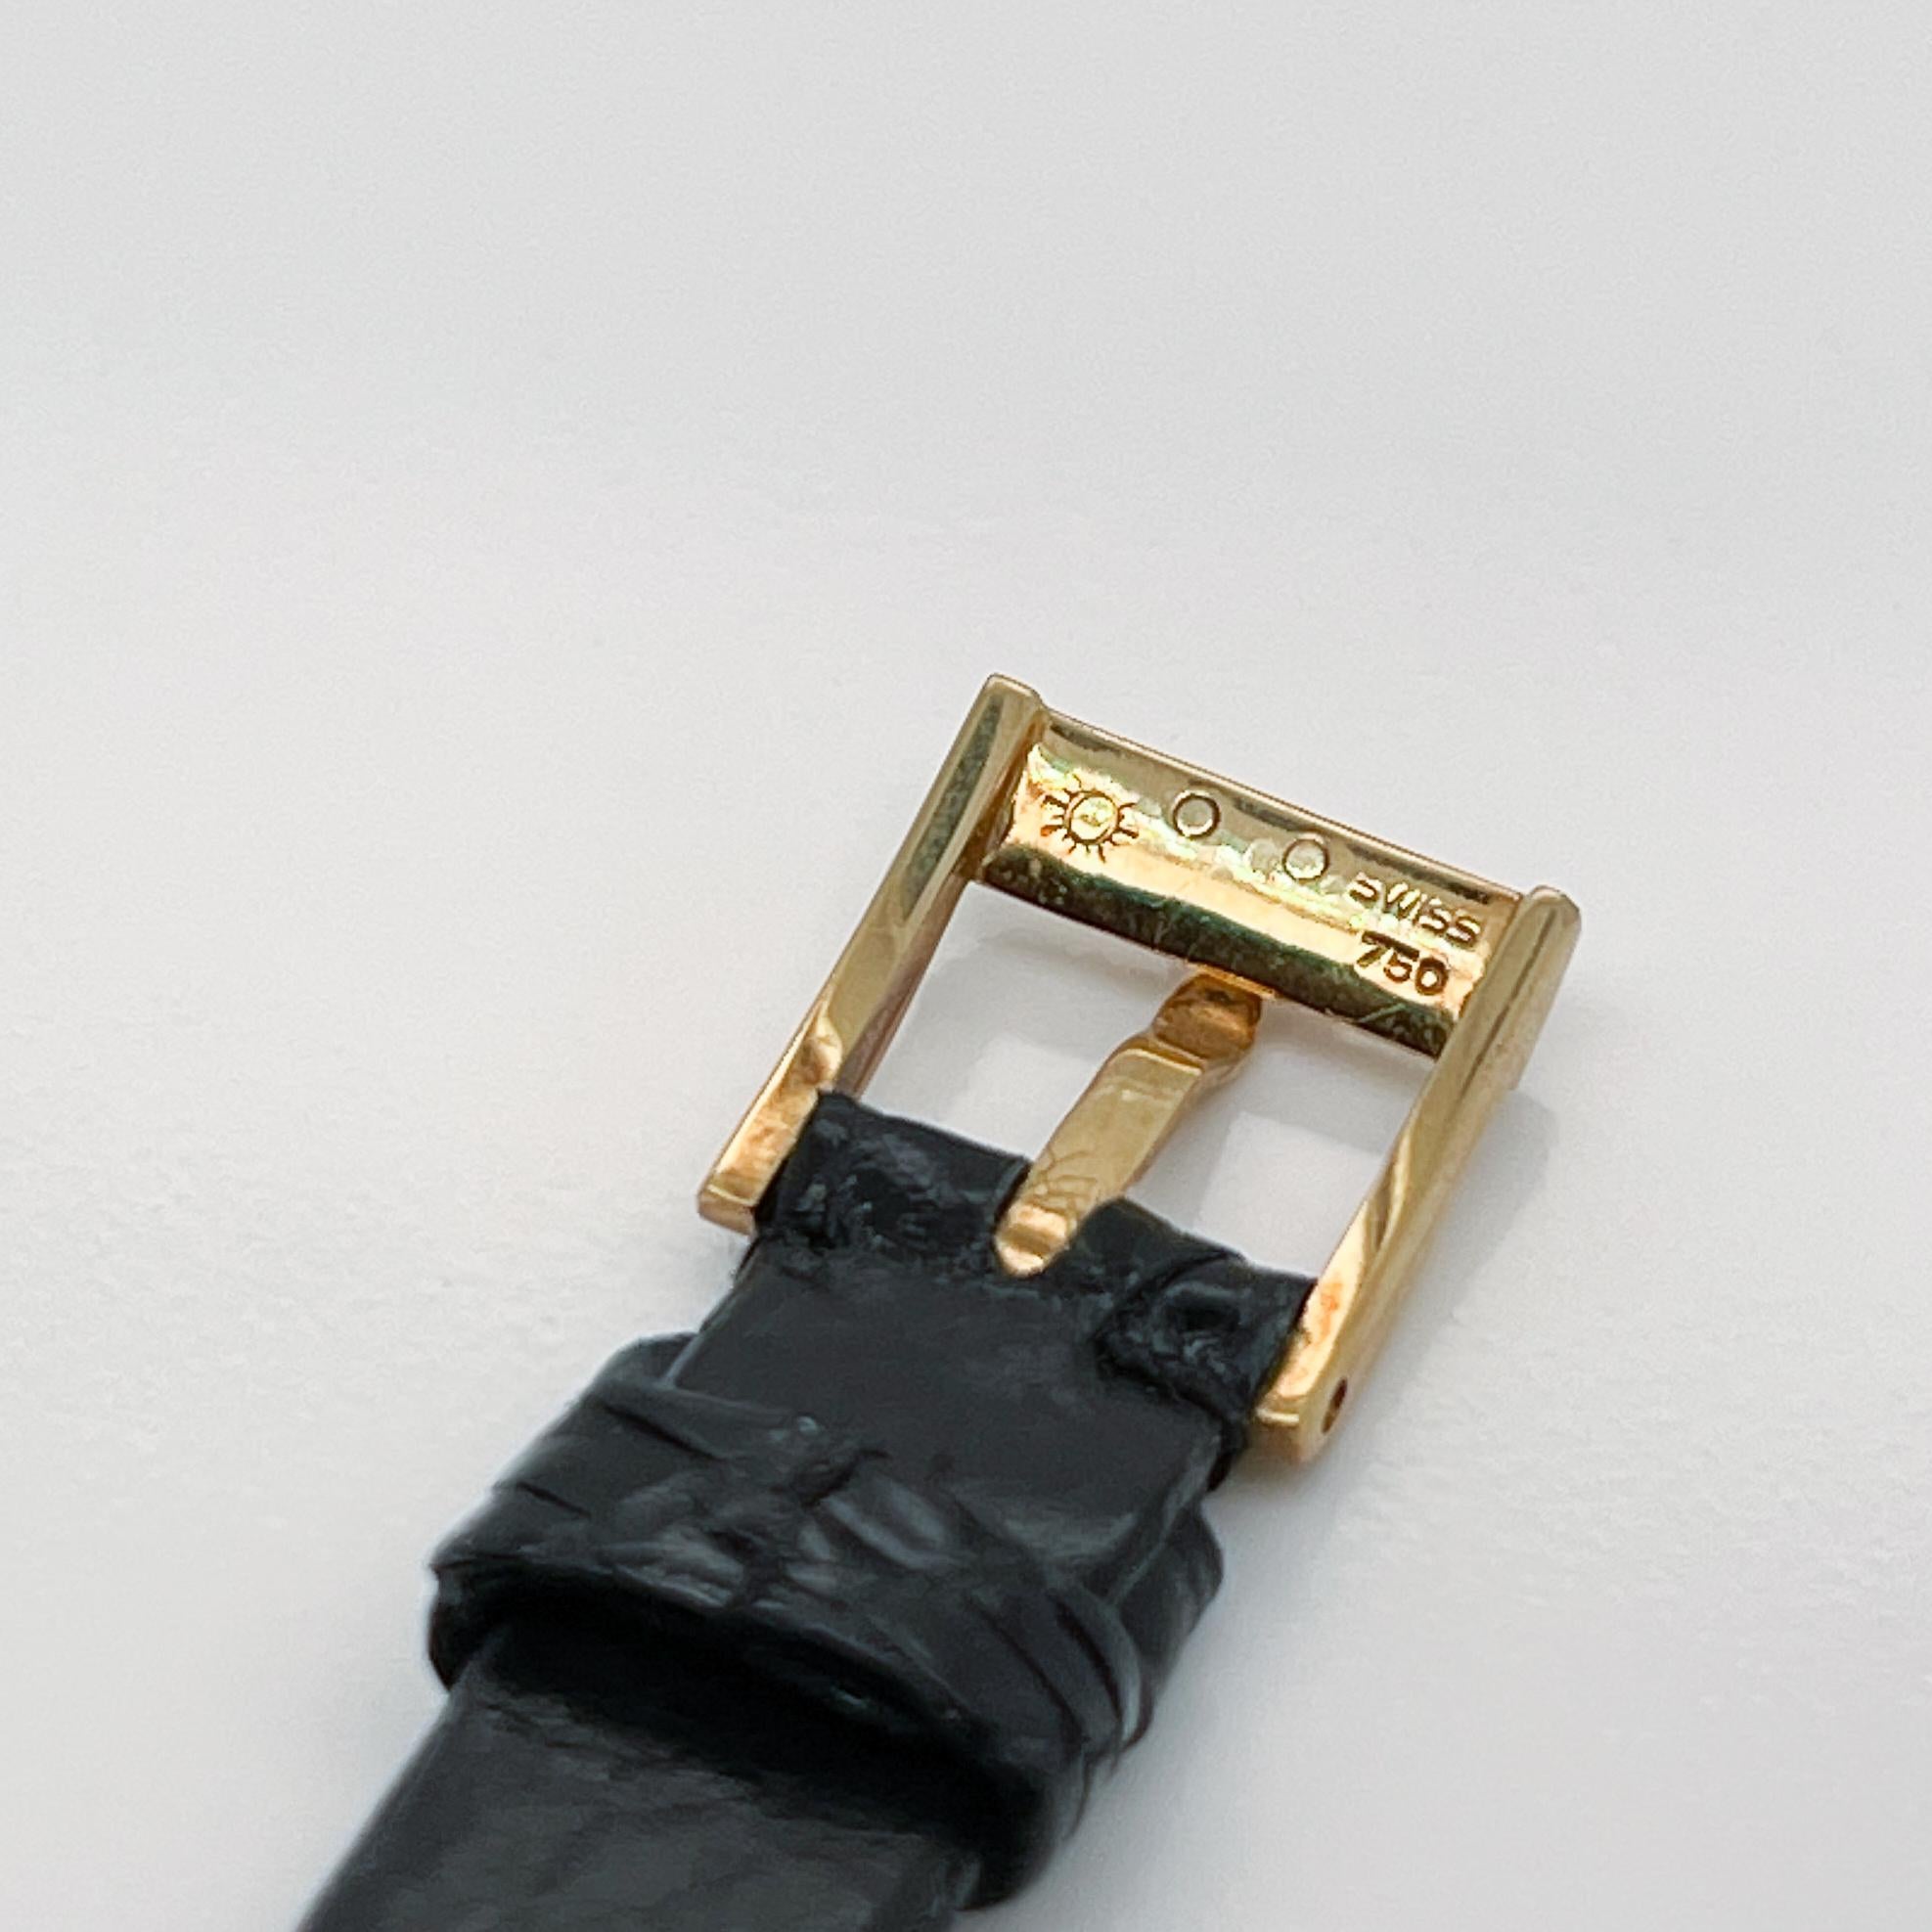 Vintage Unused Piaget 18 Karat Gold & 9mm Leather Wrist Watch Band For Sale 3